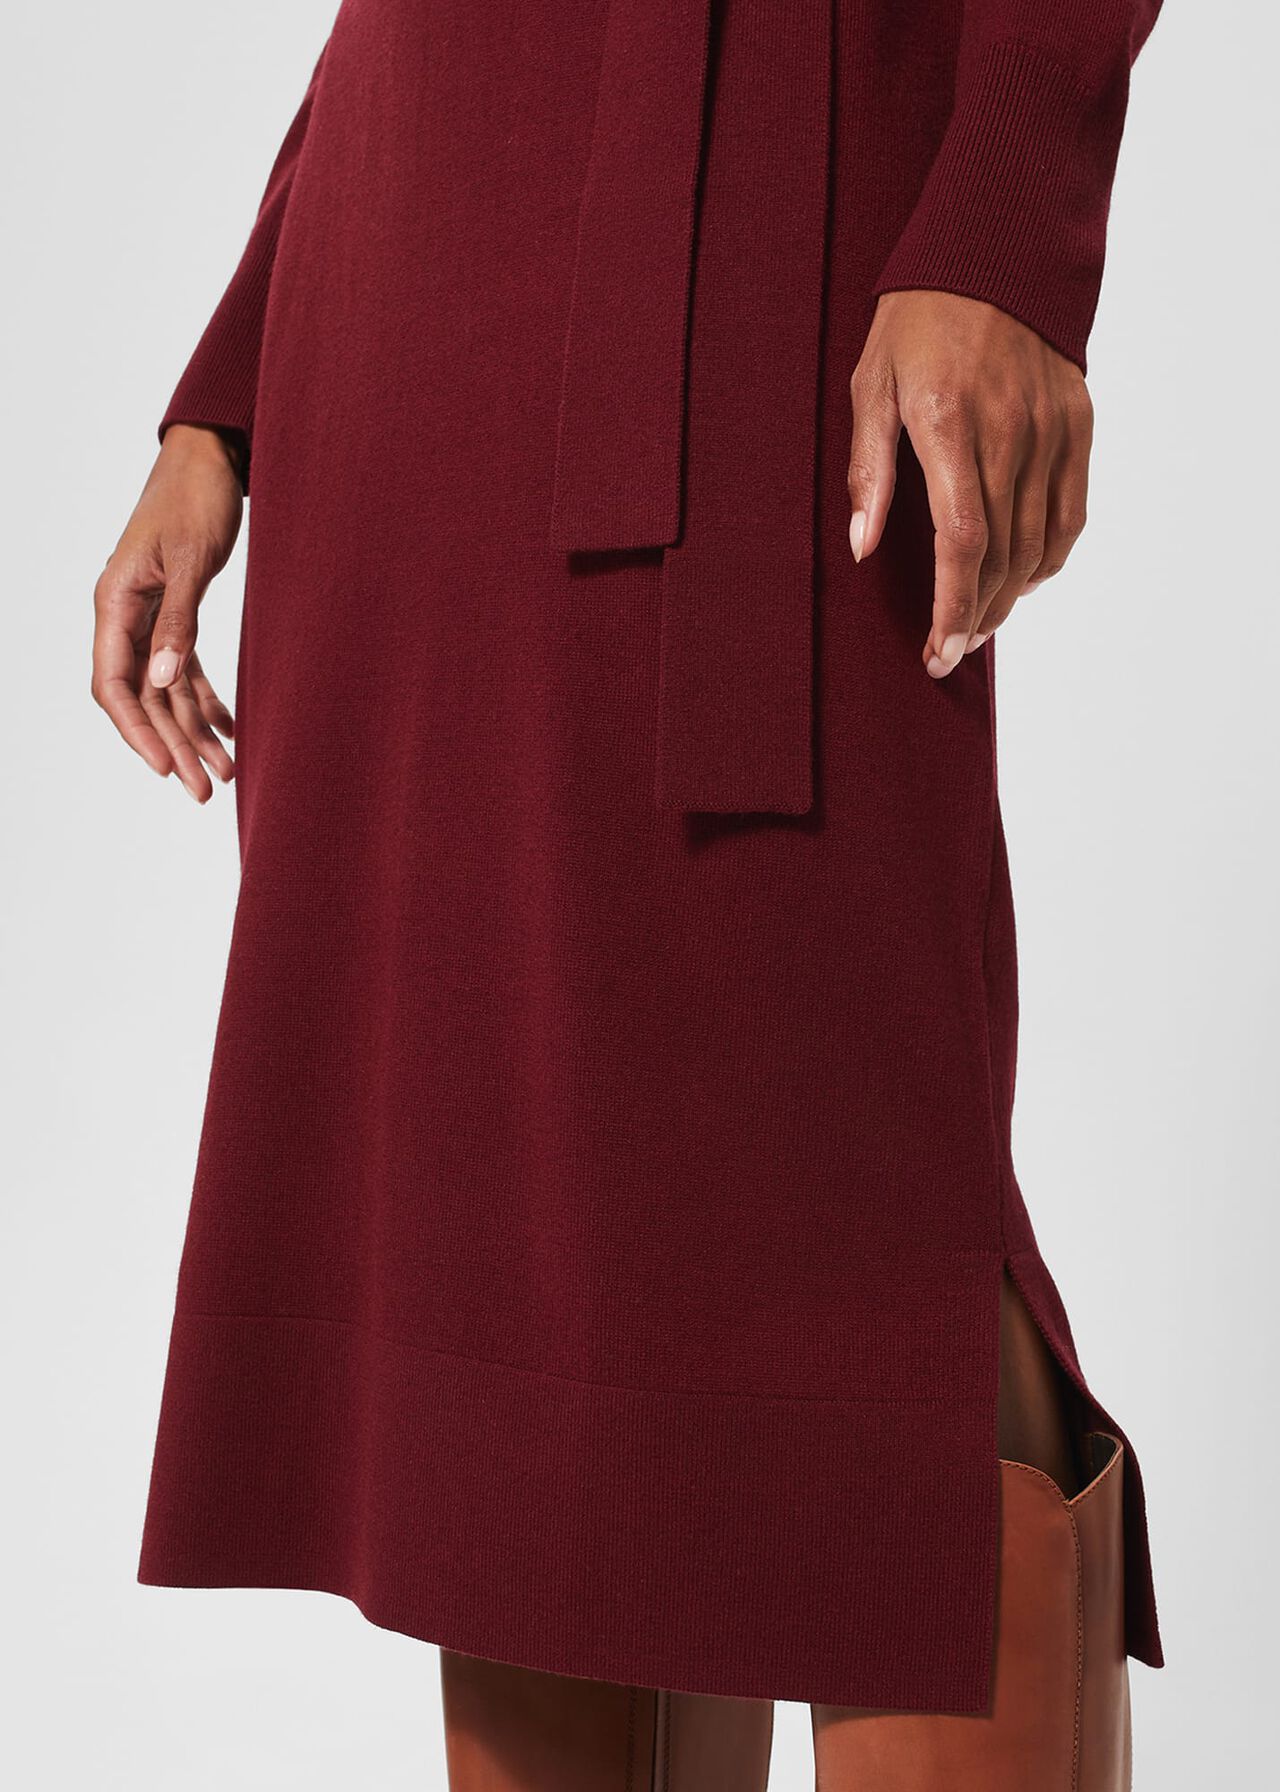 Teresa Knitted Dress, Rhubarb, hi-res